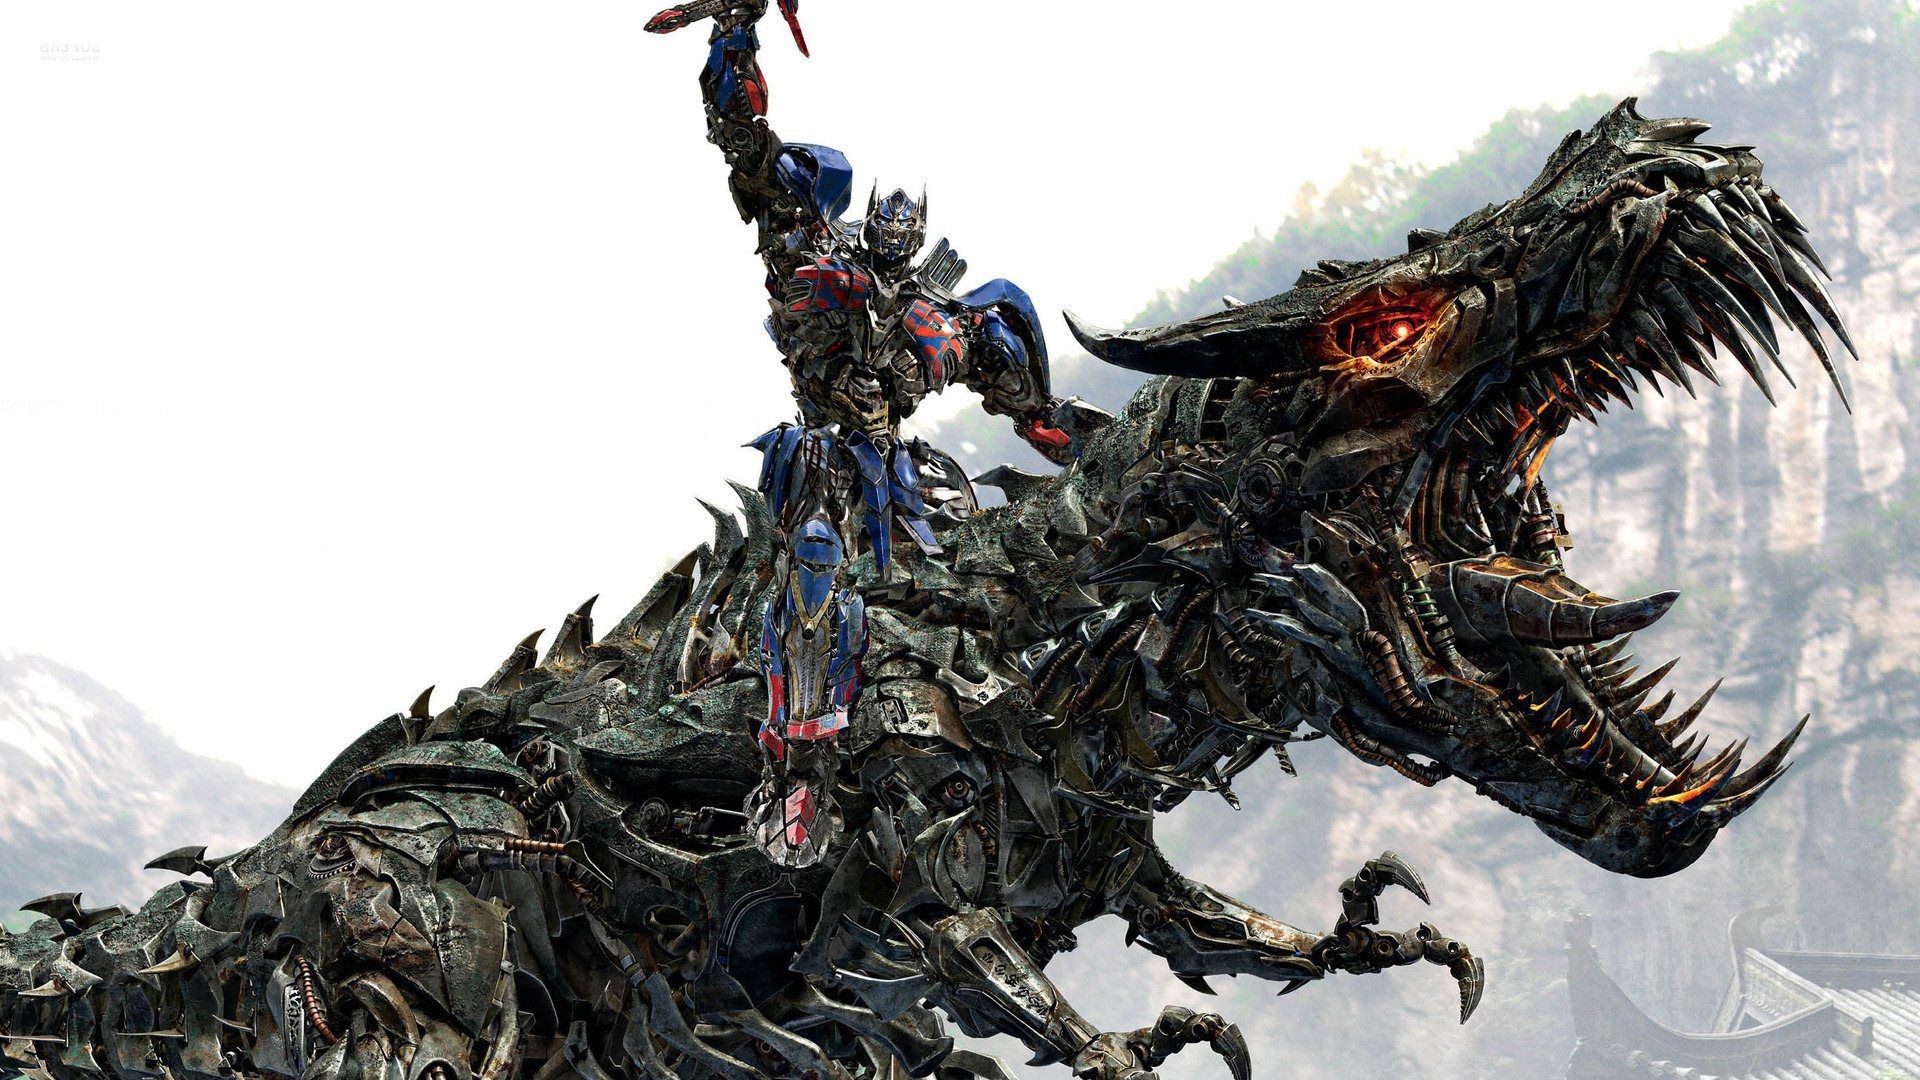 Best 20 Transformers Hd Ideas On Pinterest - Memes Jurassic World 2 - HD Wallpaper 